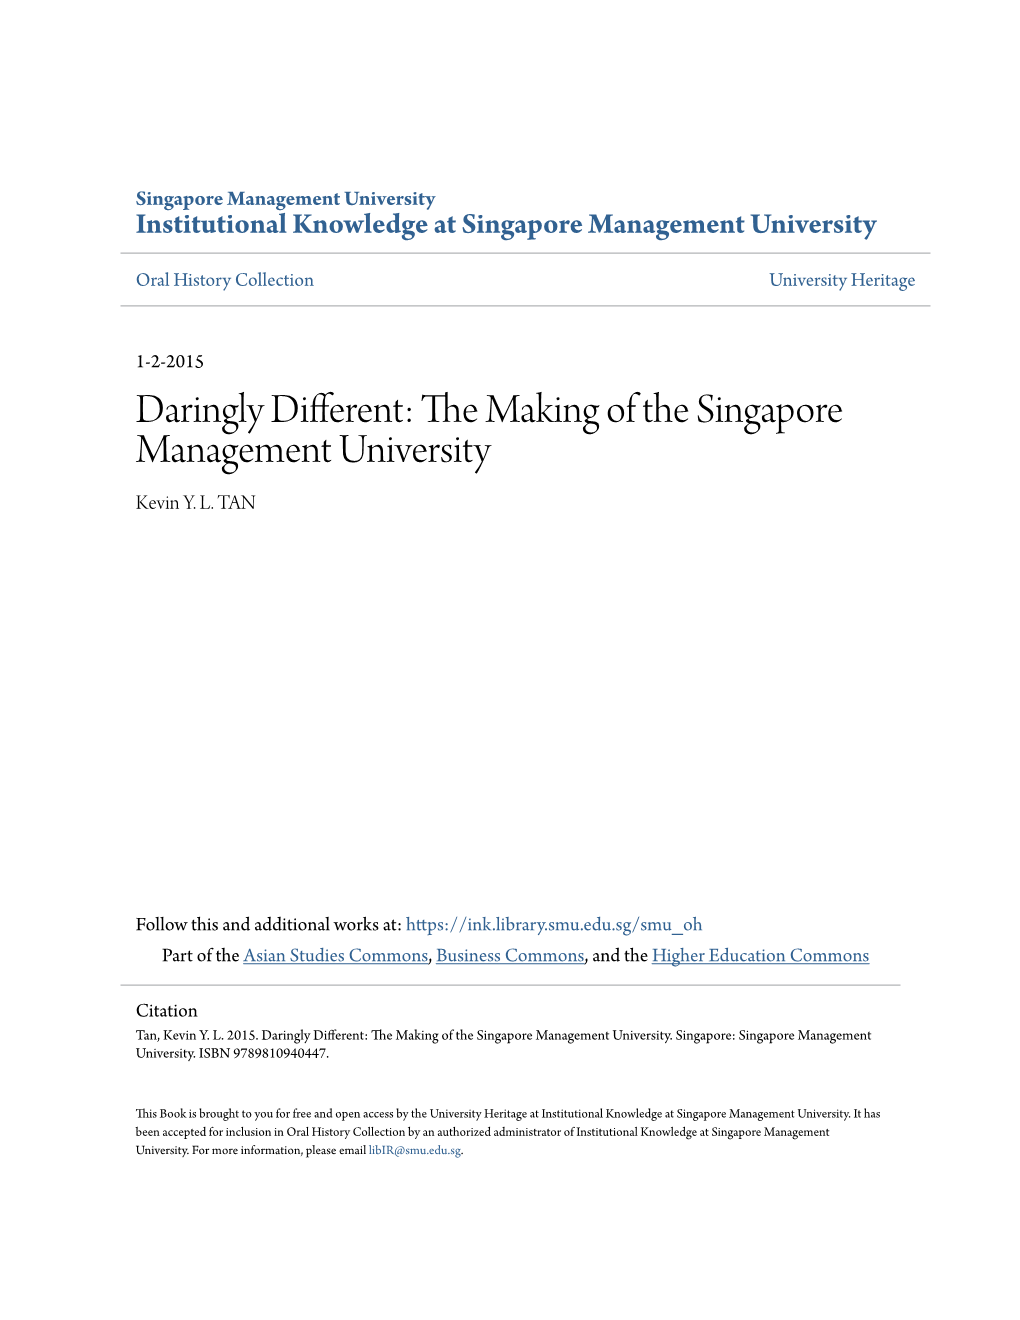 The Making of the Singapore Management University